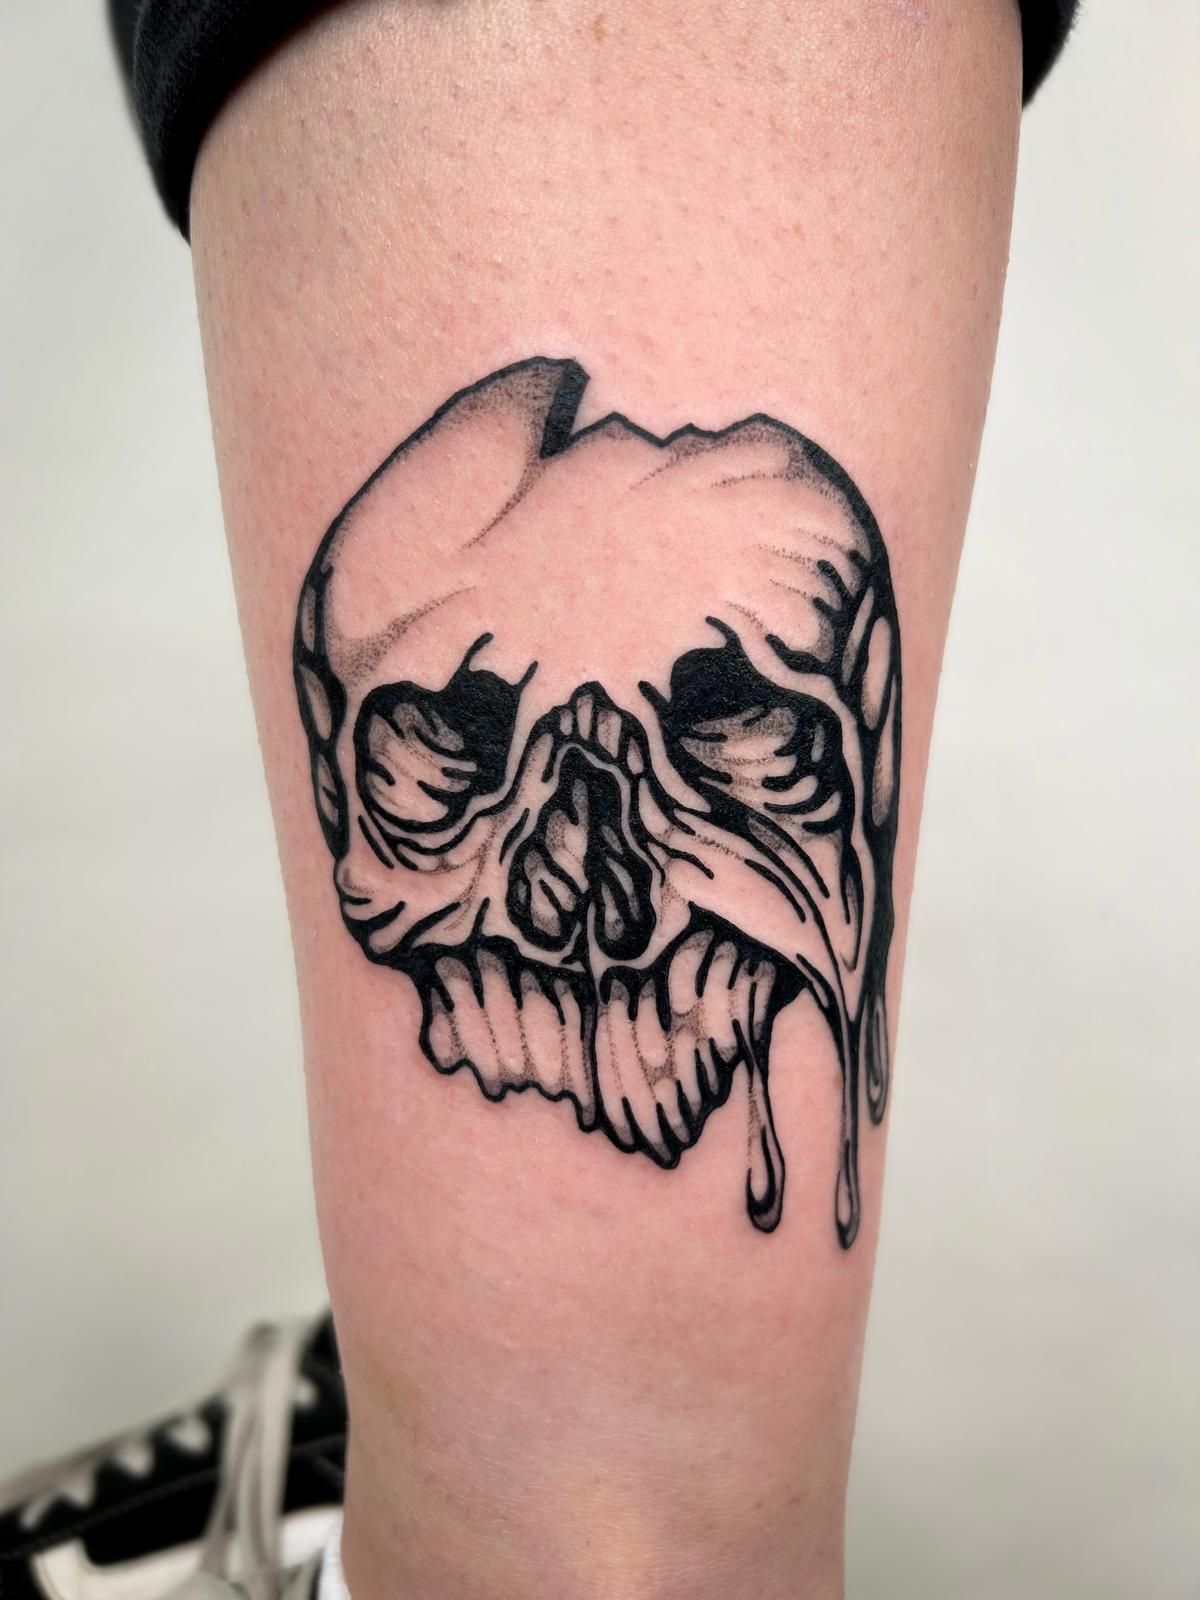 Human Skull Tattoo Design Isolated on White